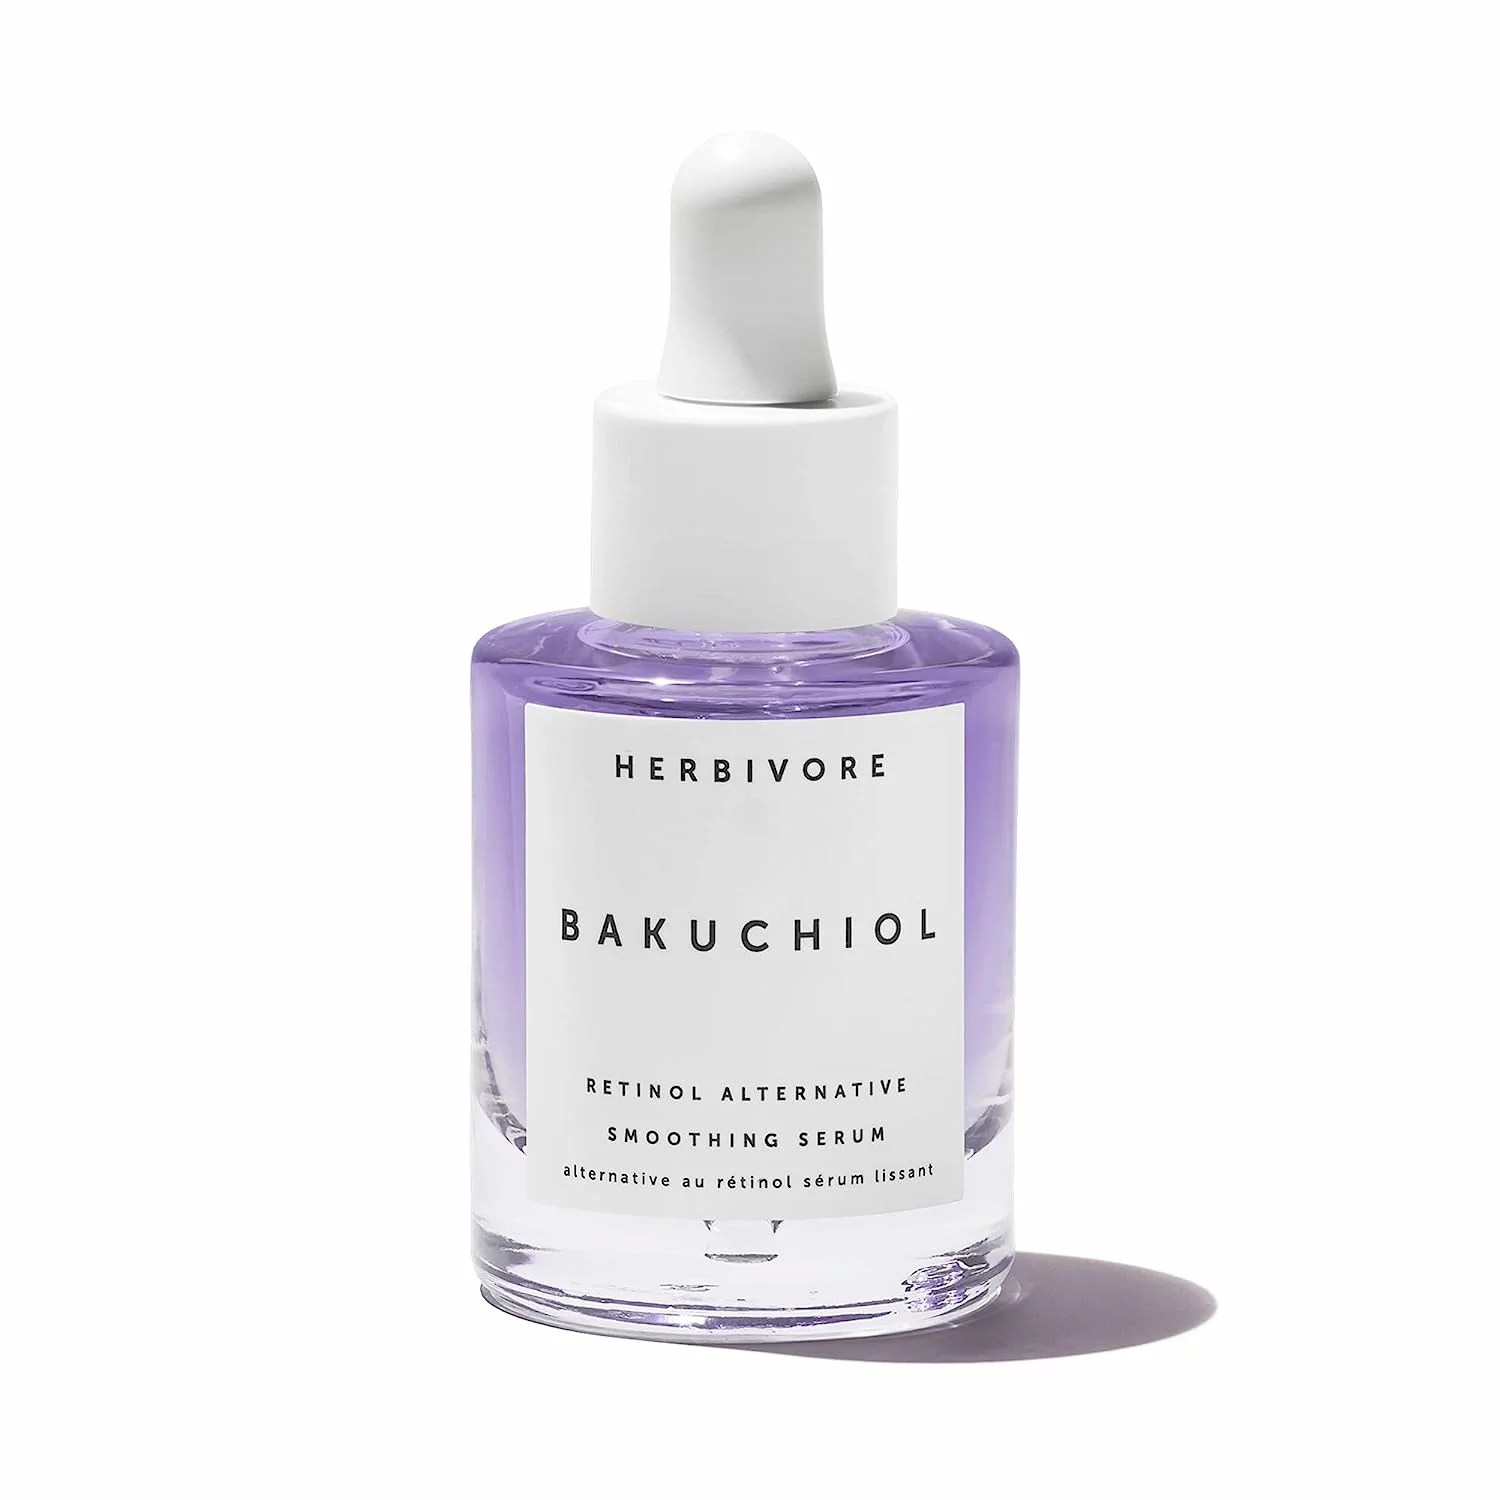 herbivore bakuchiol retinol alternative face serum